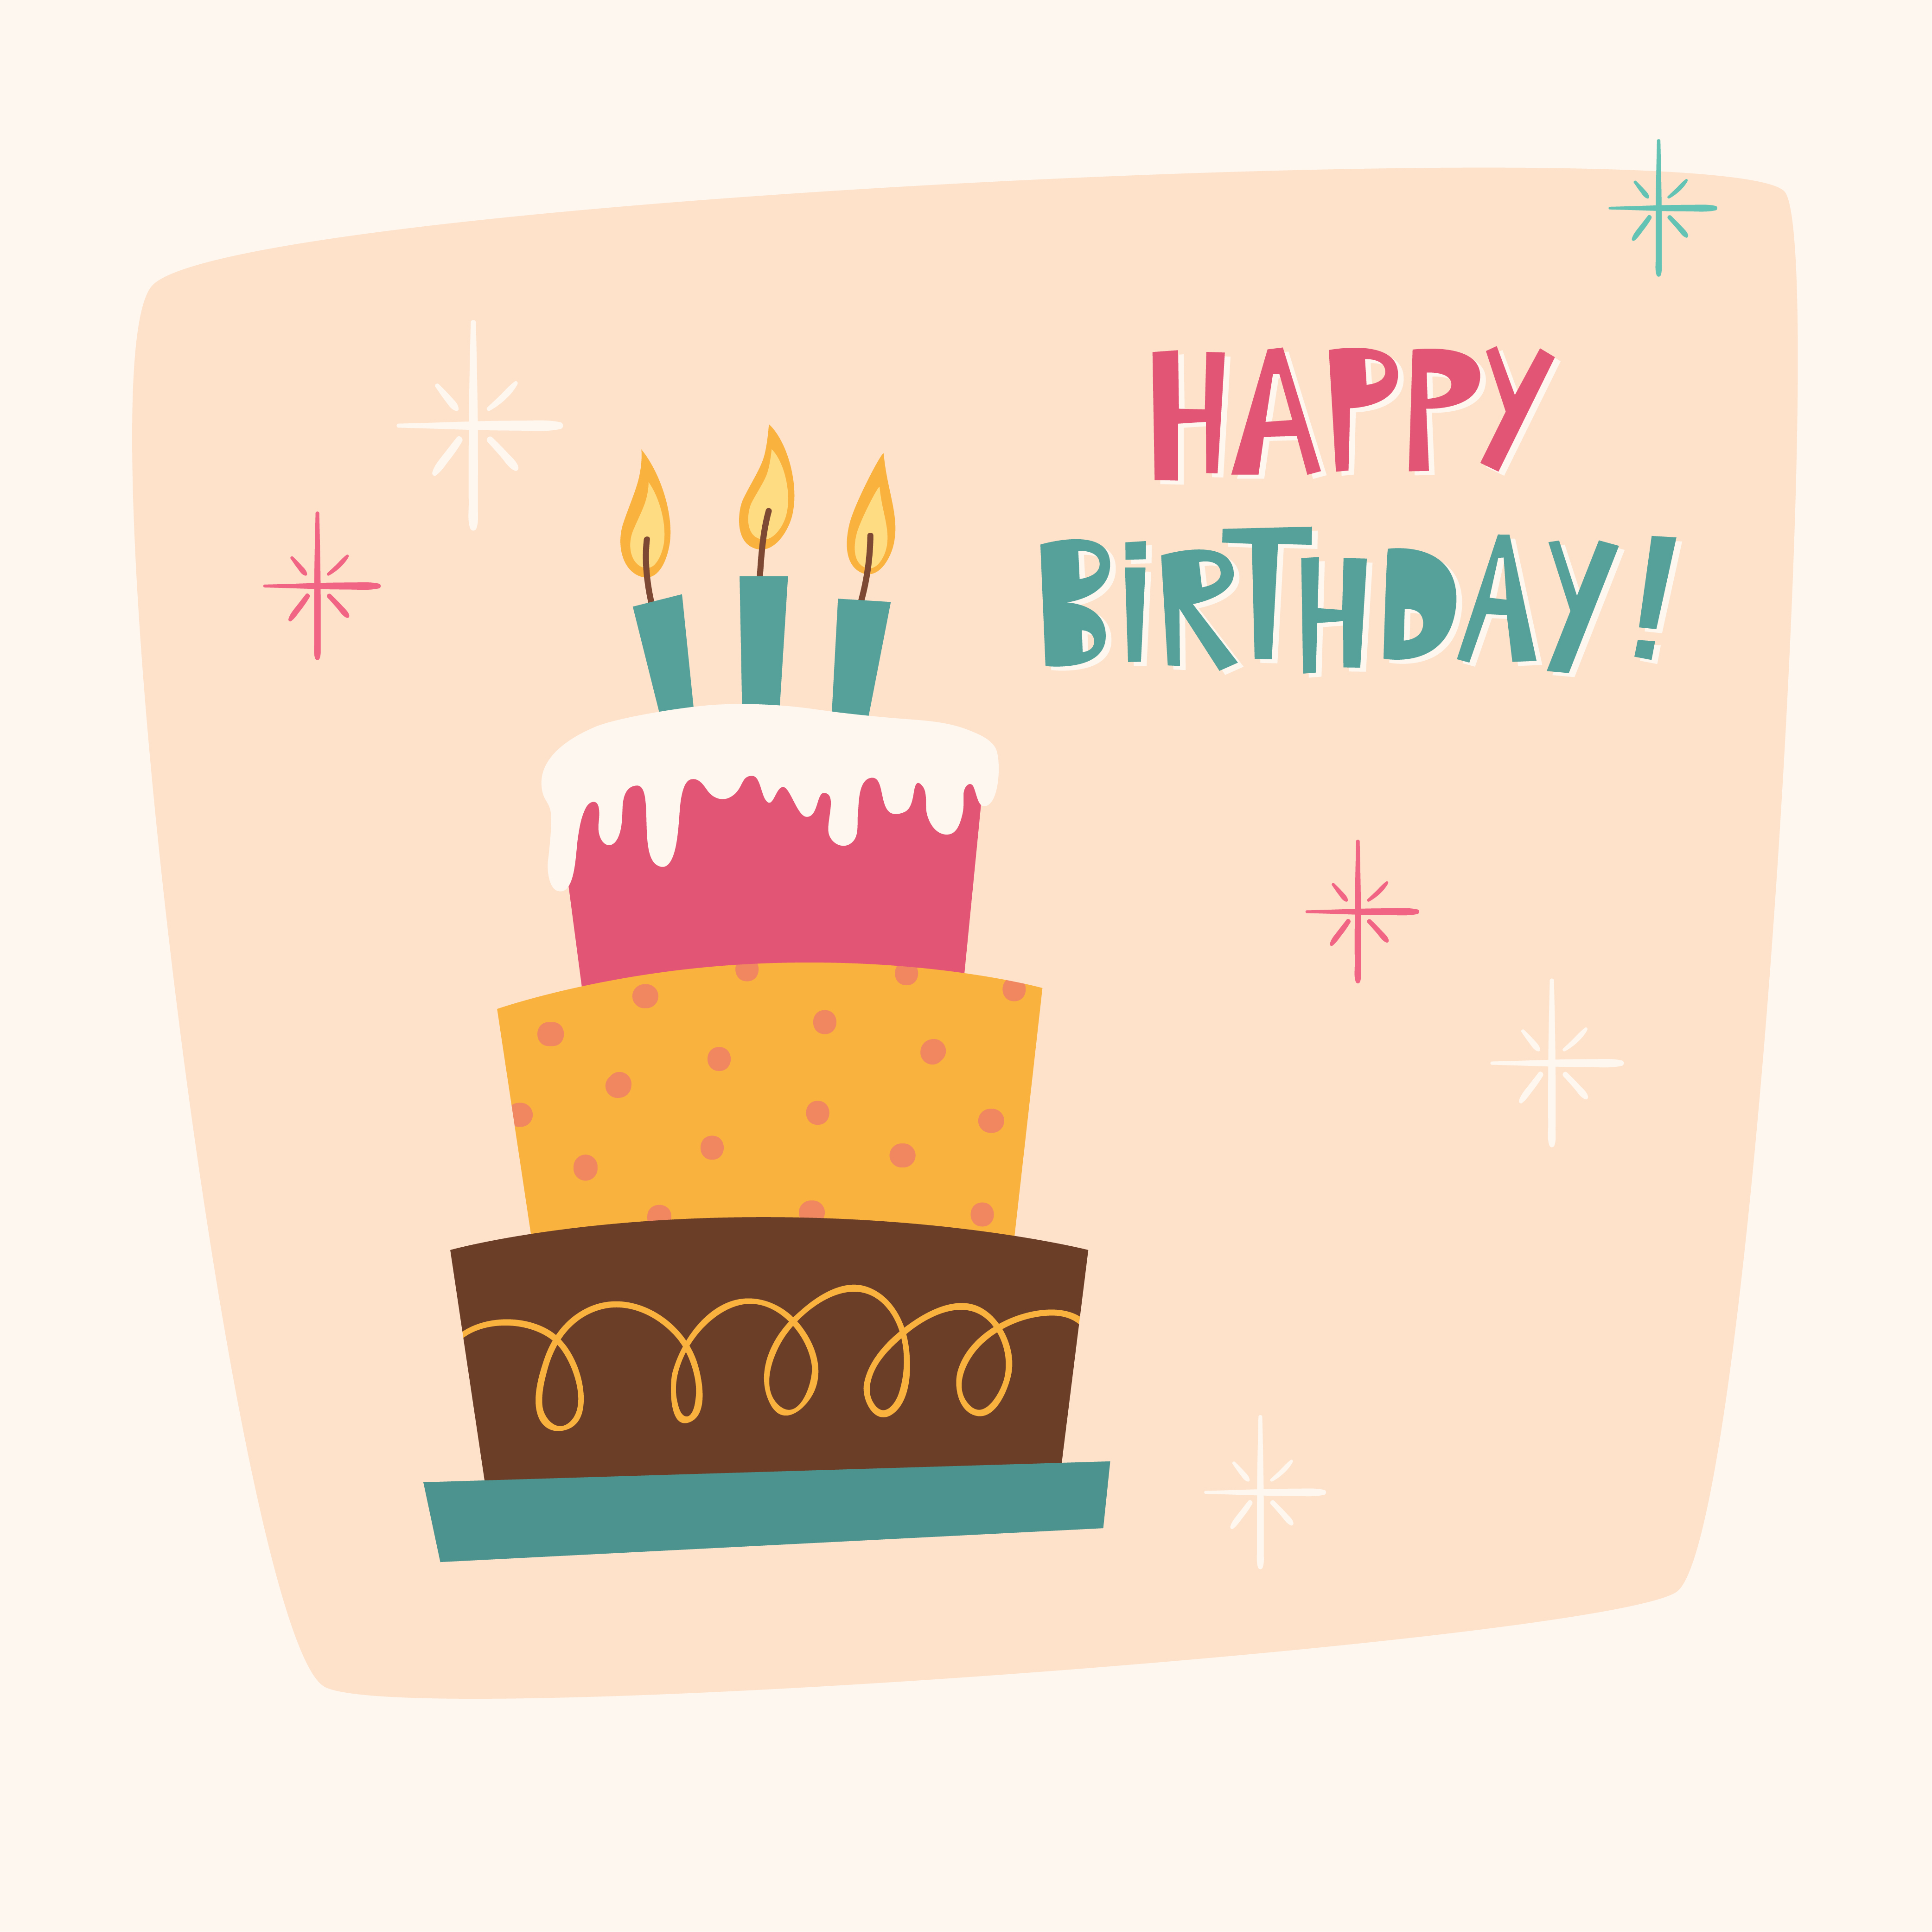 Happy Birthday card with cake Photoshop brush